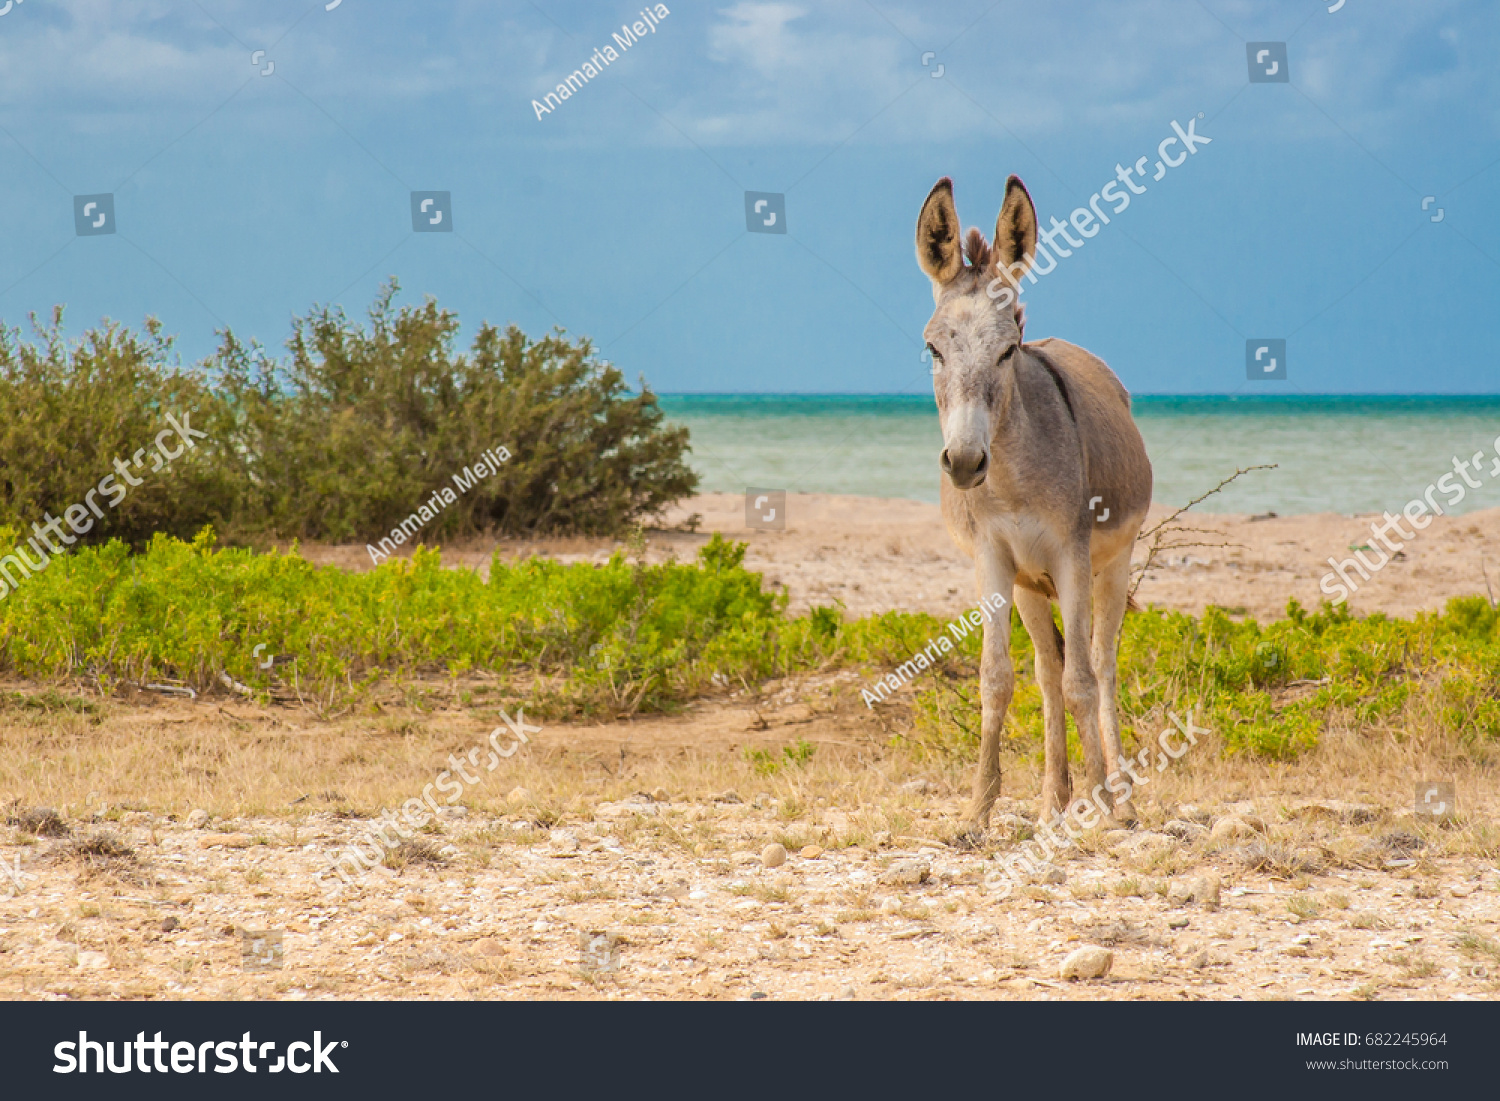 Donkey beside the beach at Cabo de la Vela #682245964